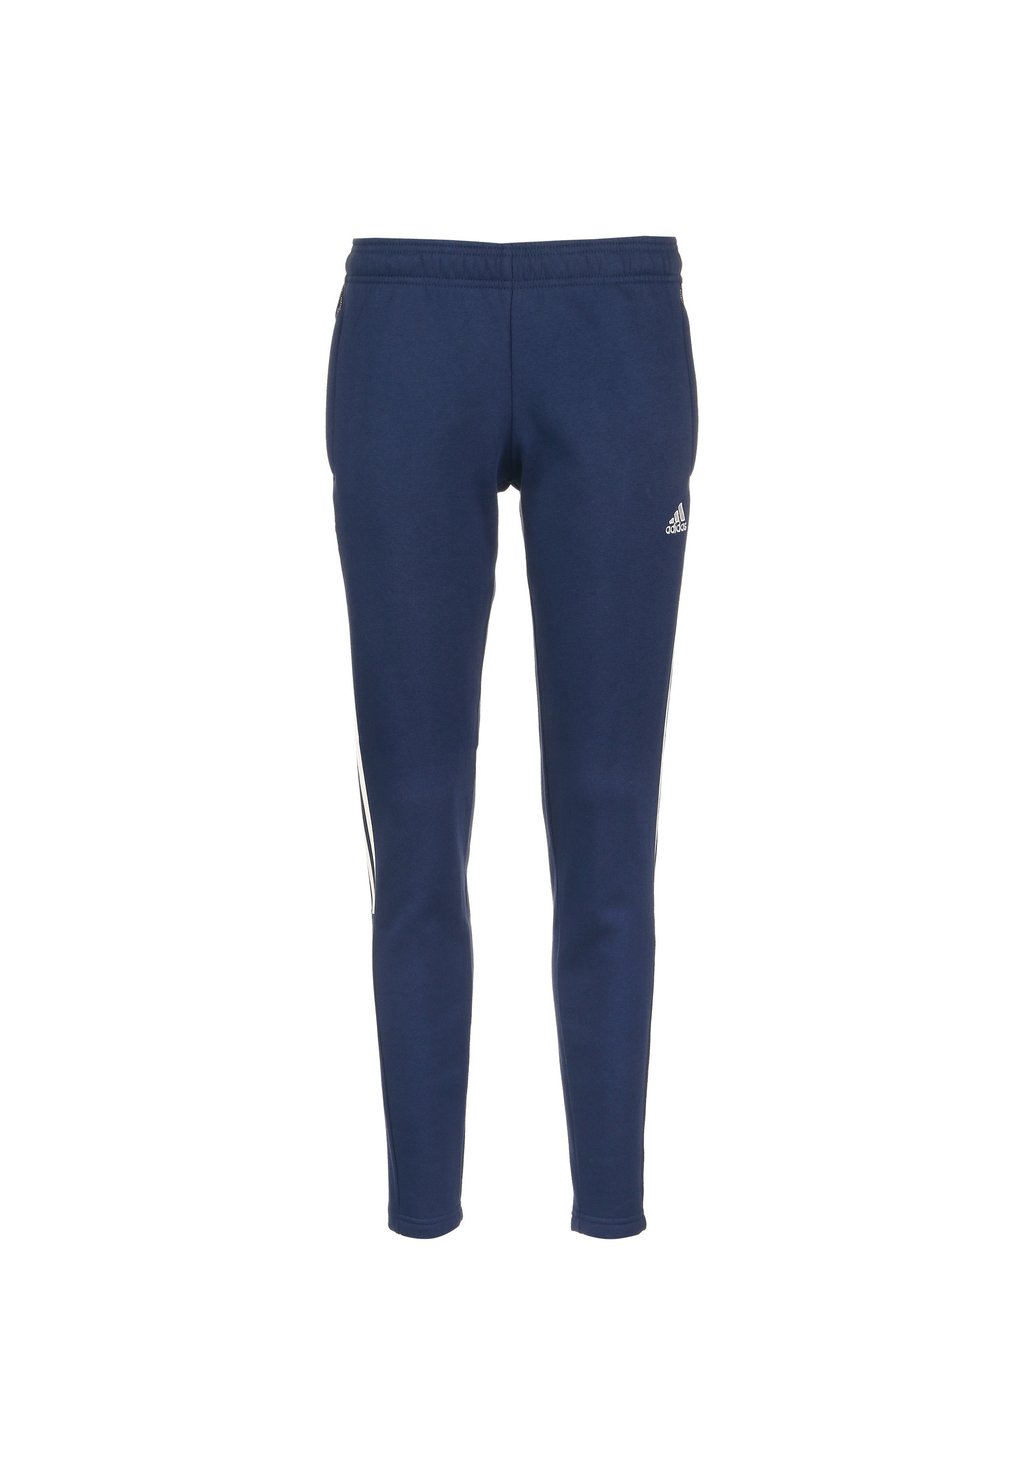 Спортивные брюки темно-синего цвета Adidas, темно-синий soho navy blue gold 6 s coffee team